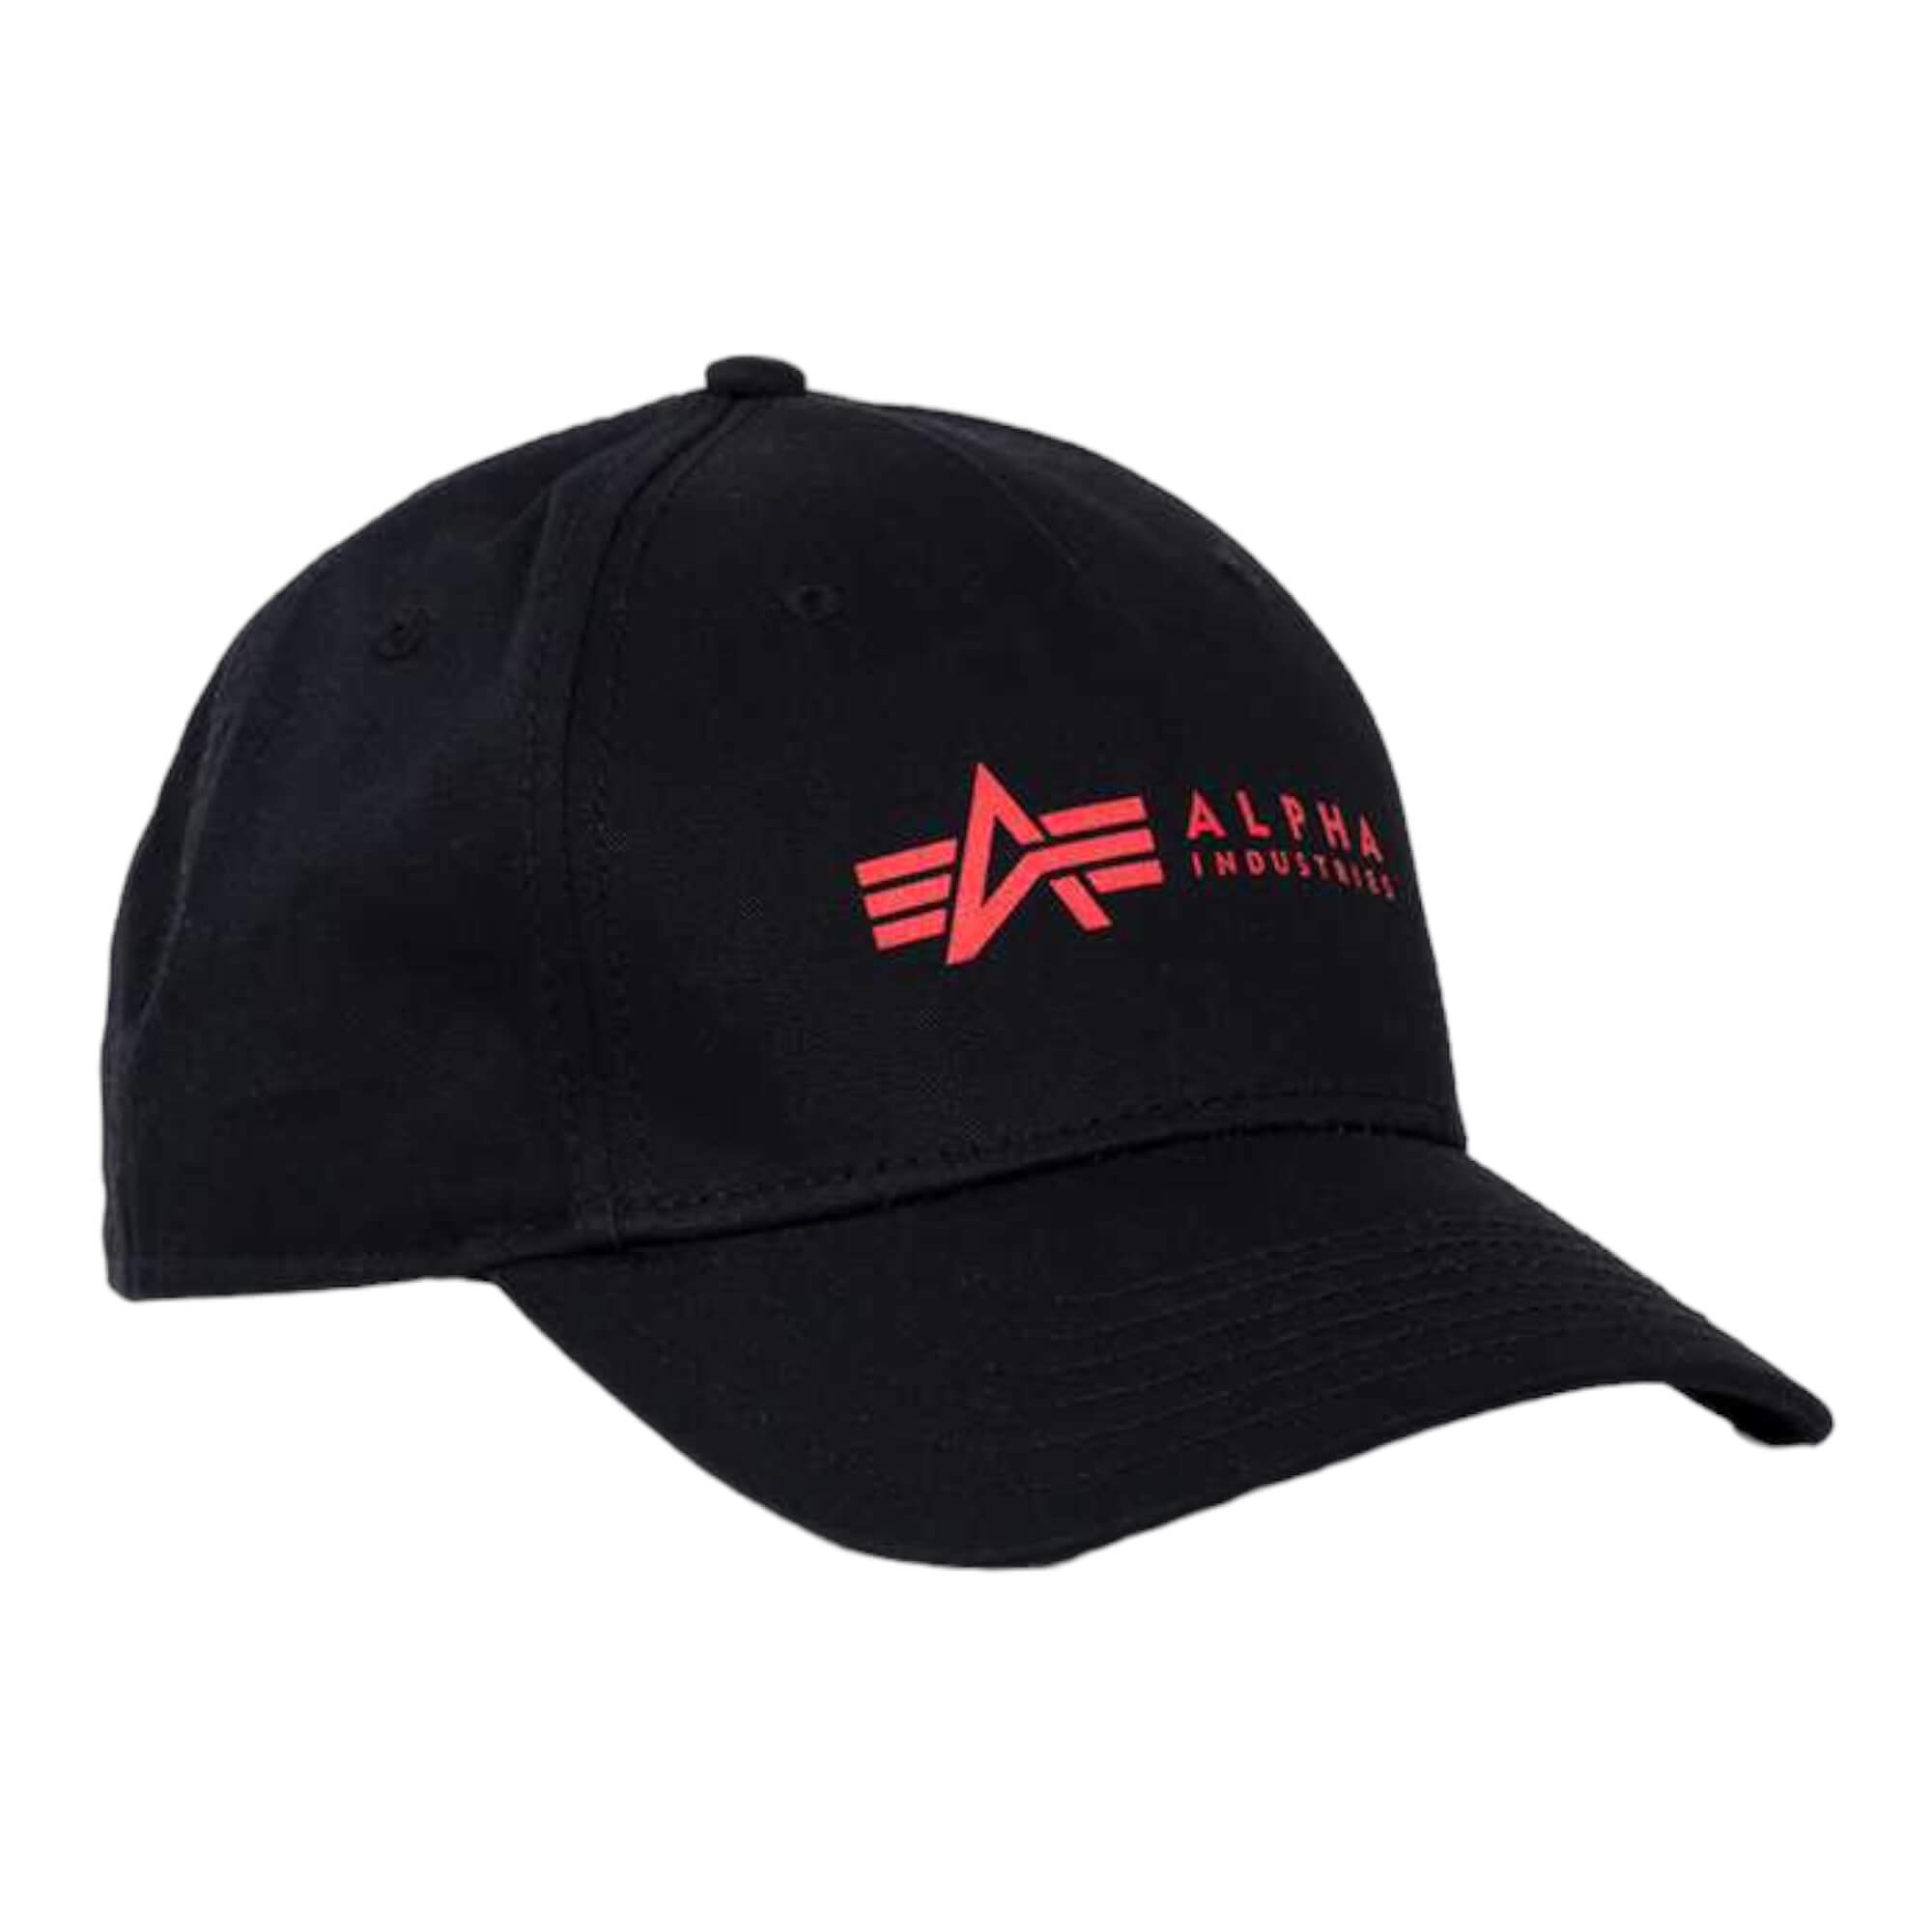 - Clothes Exclusive black fuchsia Alpha alpha cap logo industries